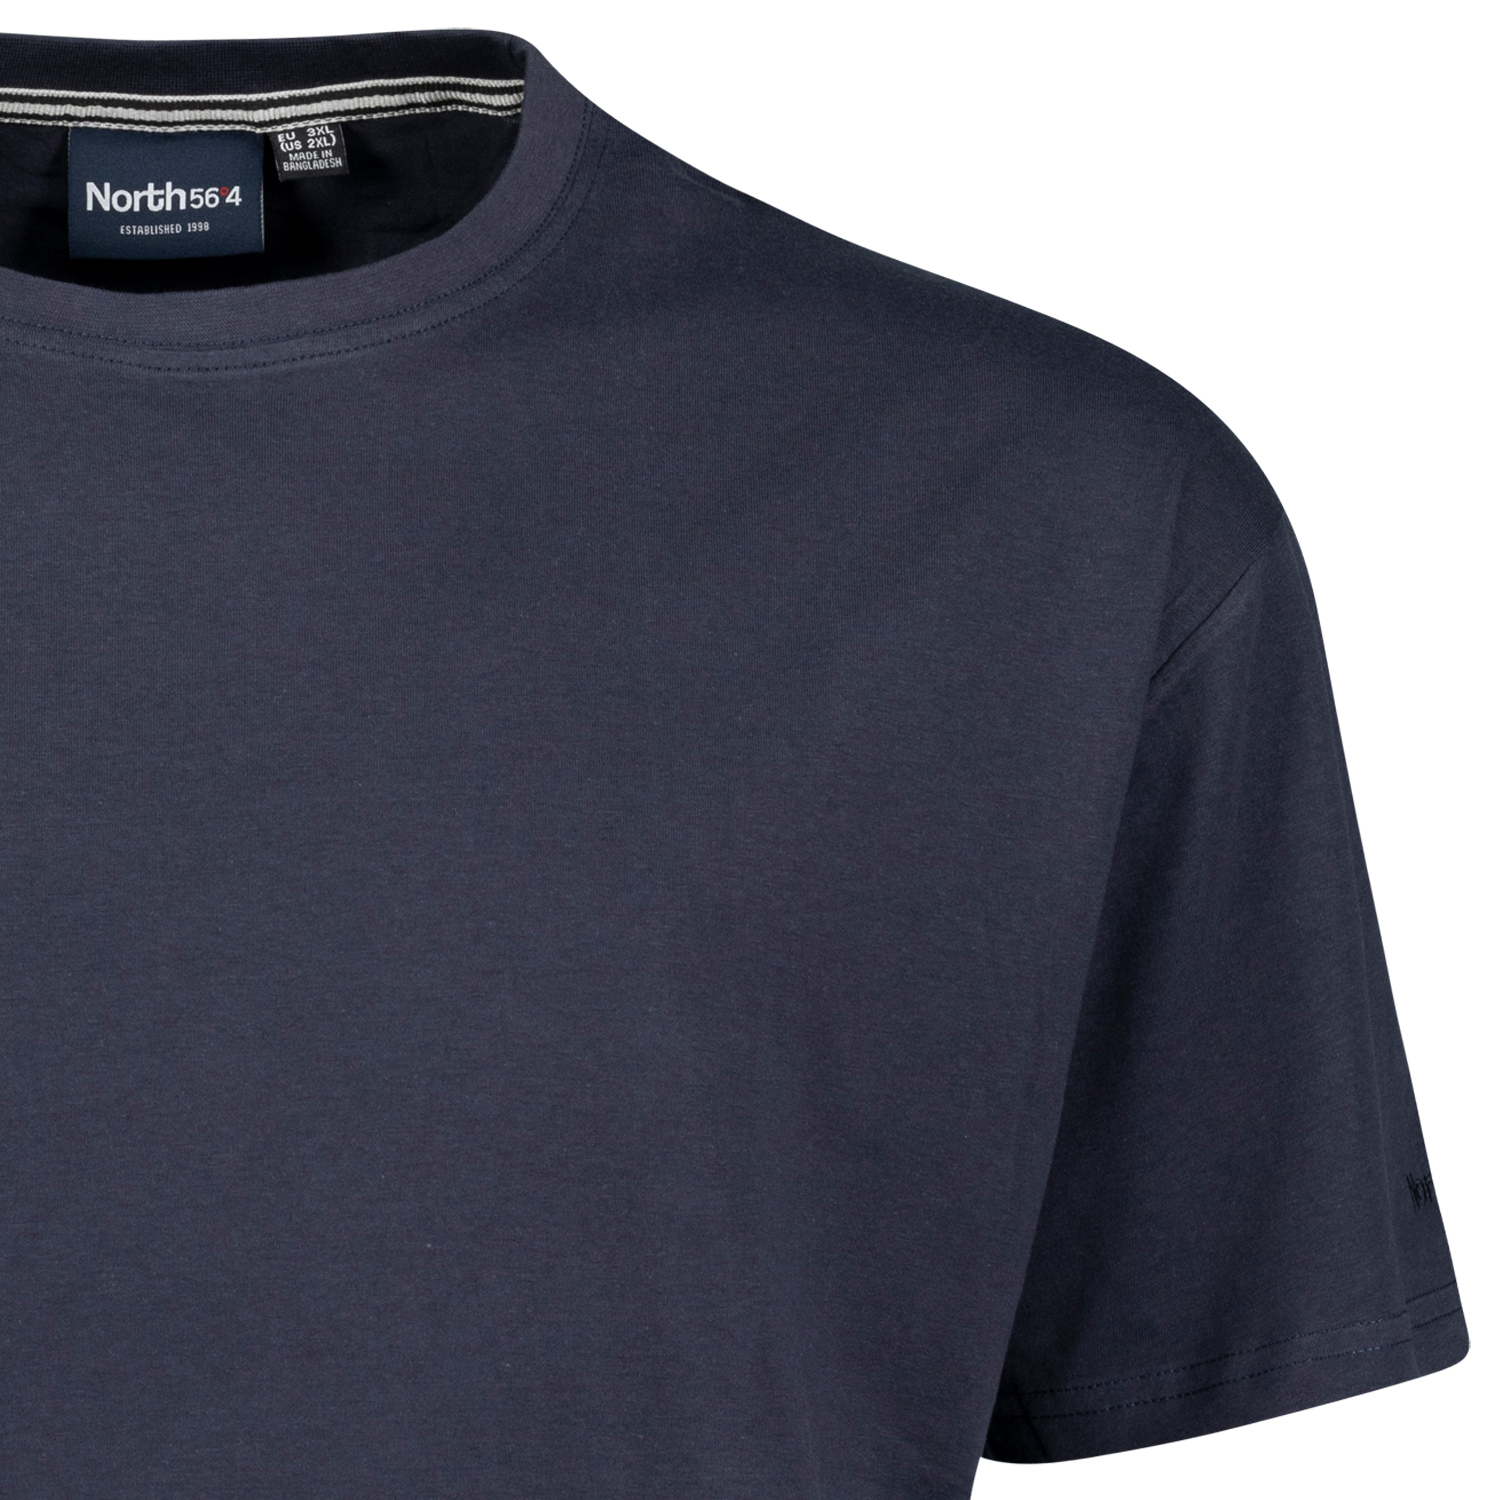 T-shirt in dark blue by North56°4 in plus sizes until 8XL